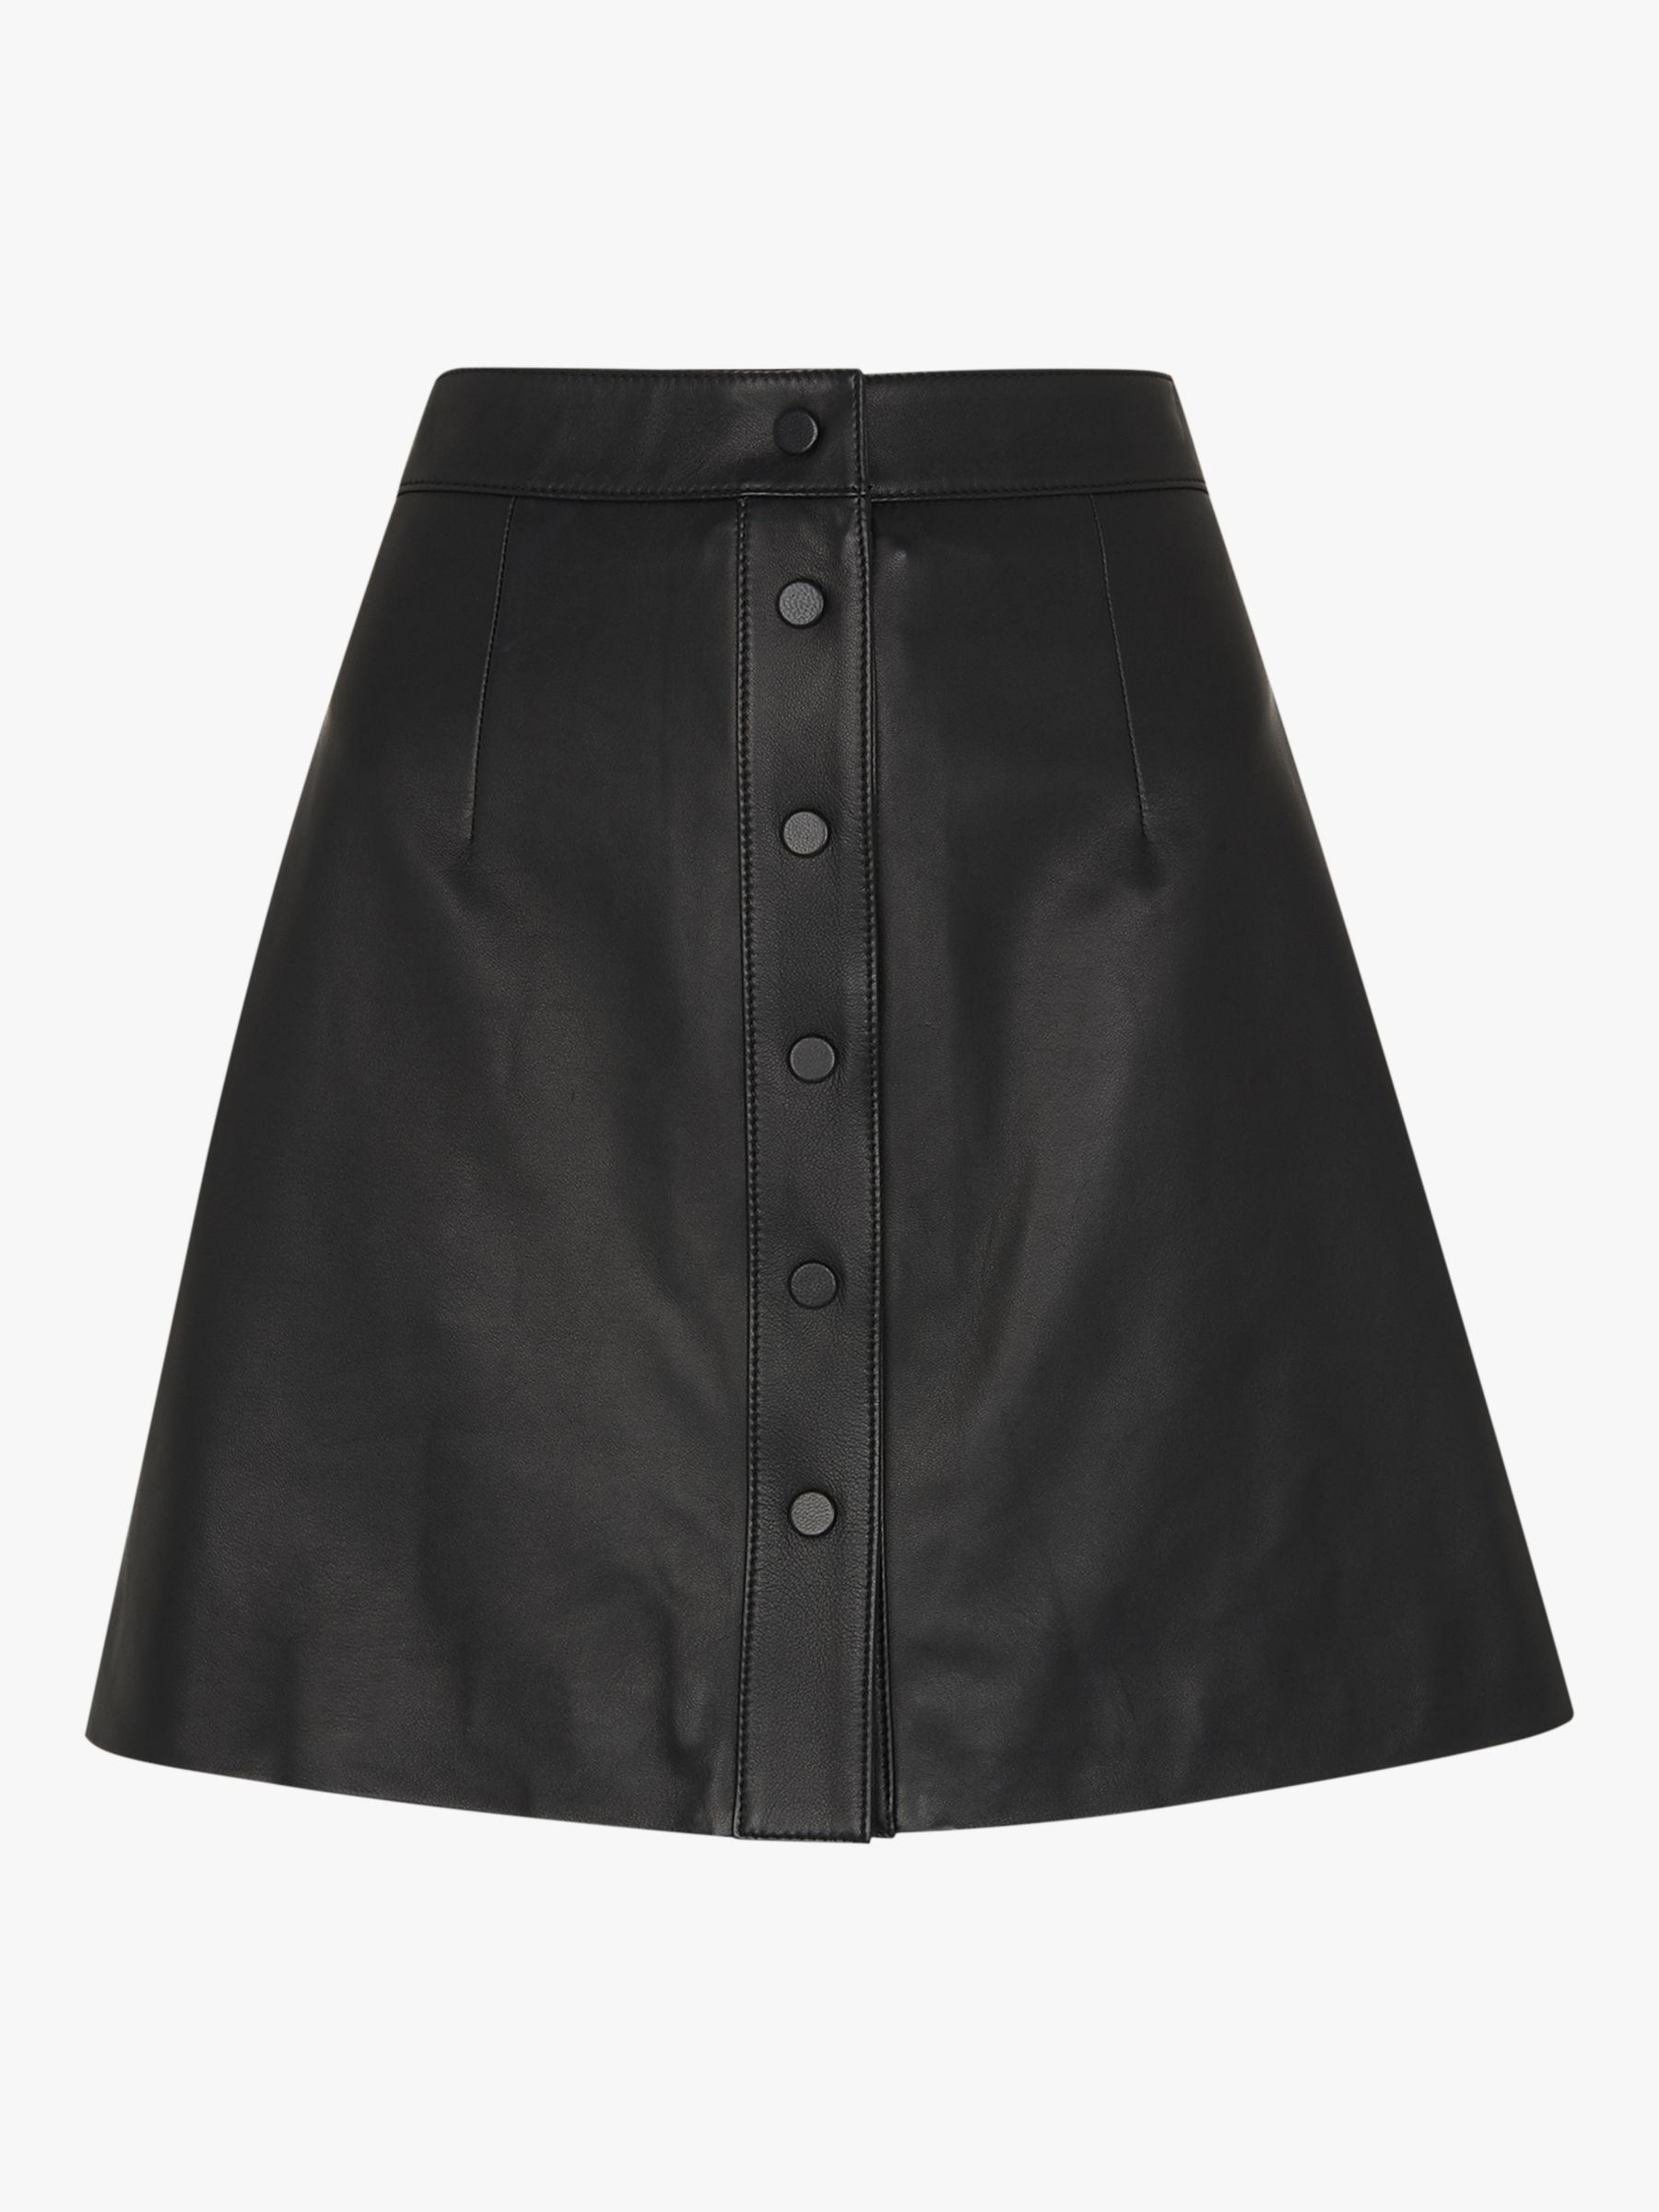 Whistles Leather Button Mini Skirt, Black at John Lewis & Partners